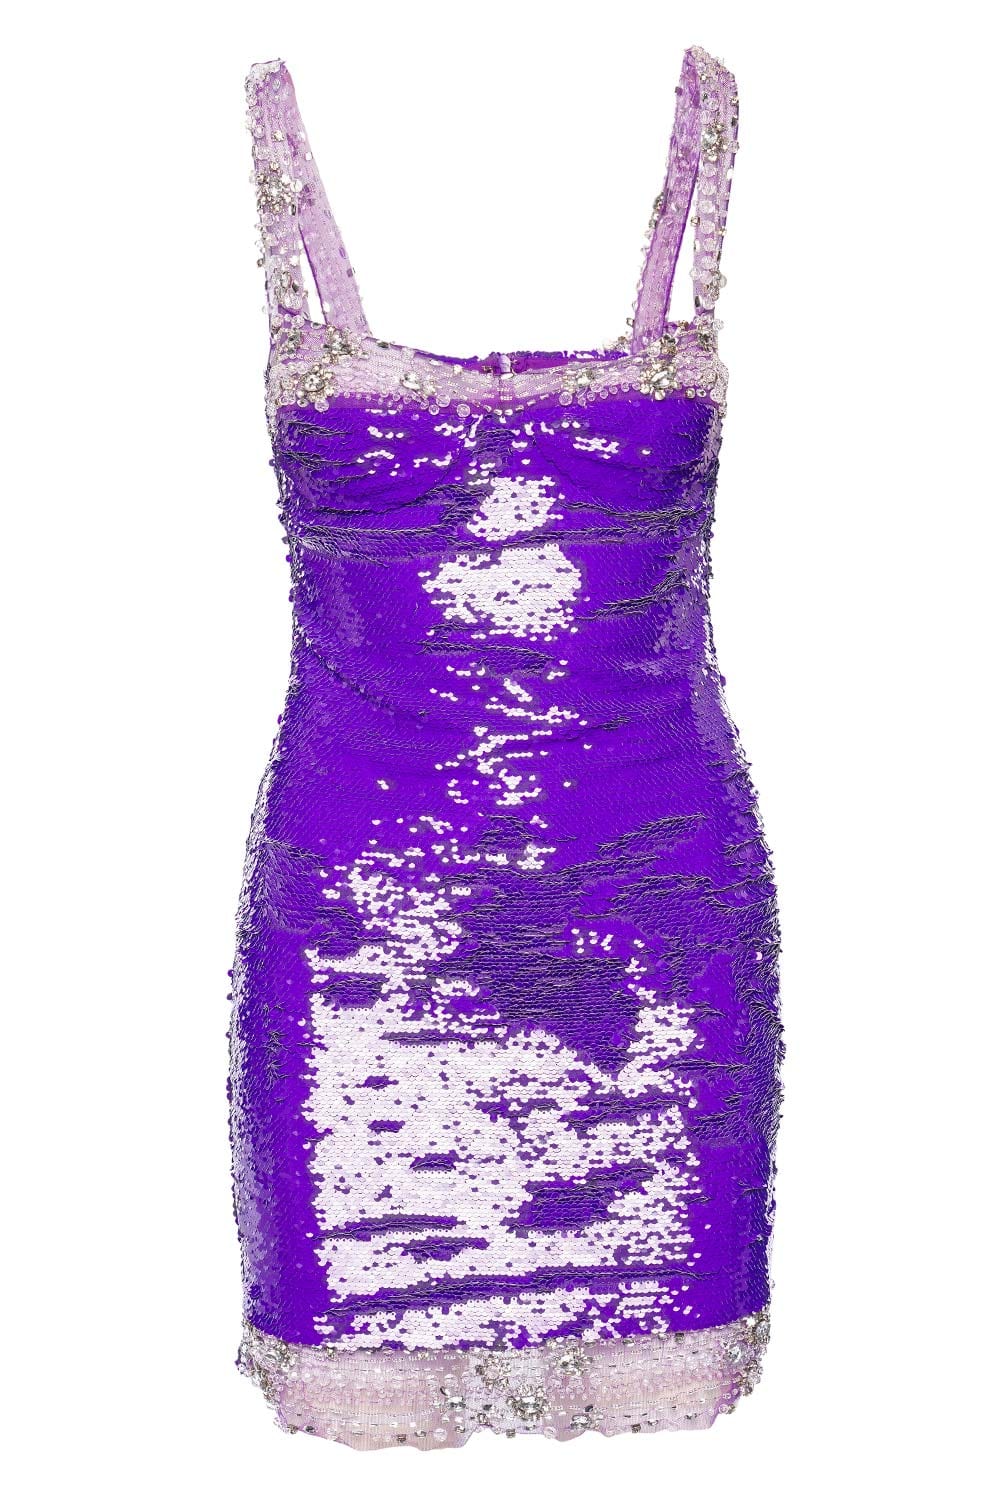 PatBO Purple Crystal Beaded Sequin Mini Dress